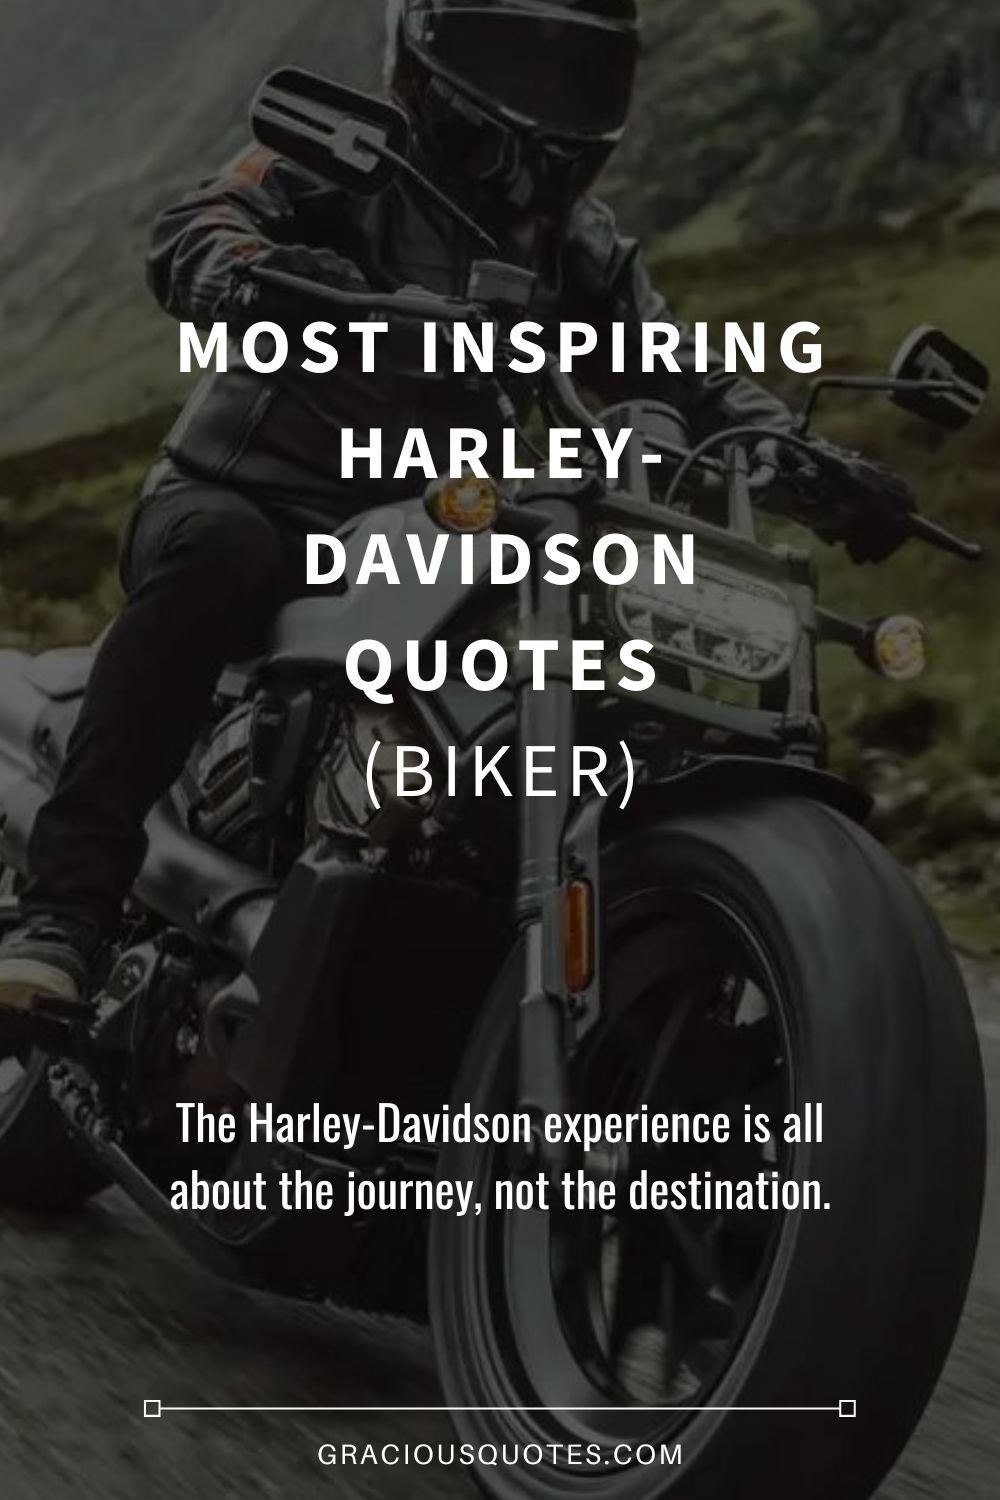 Most Inspiring Harley-Davidson Quotes (BIKER) - Gracious Quotes